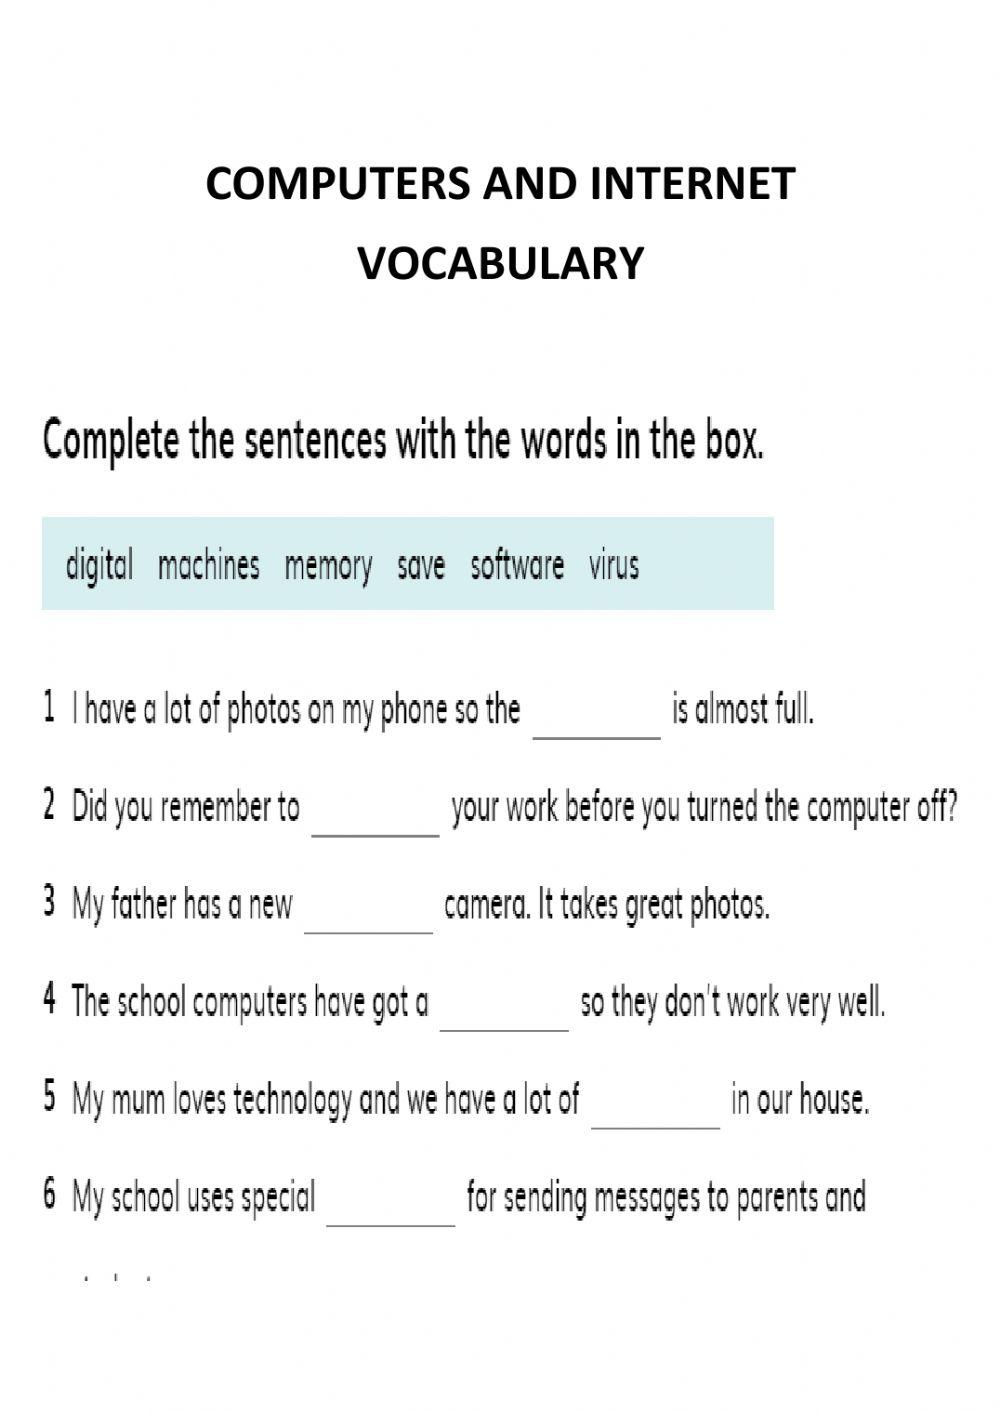 Computers vocabulary